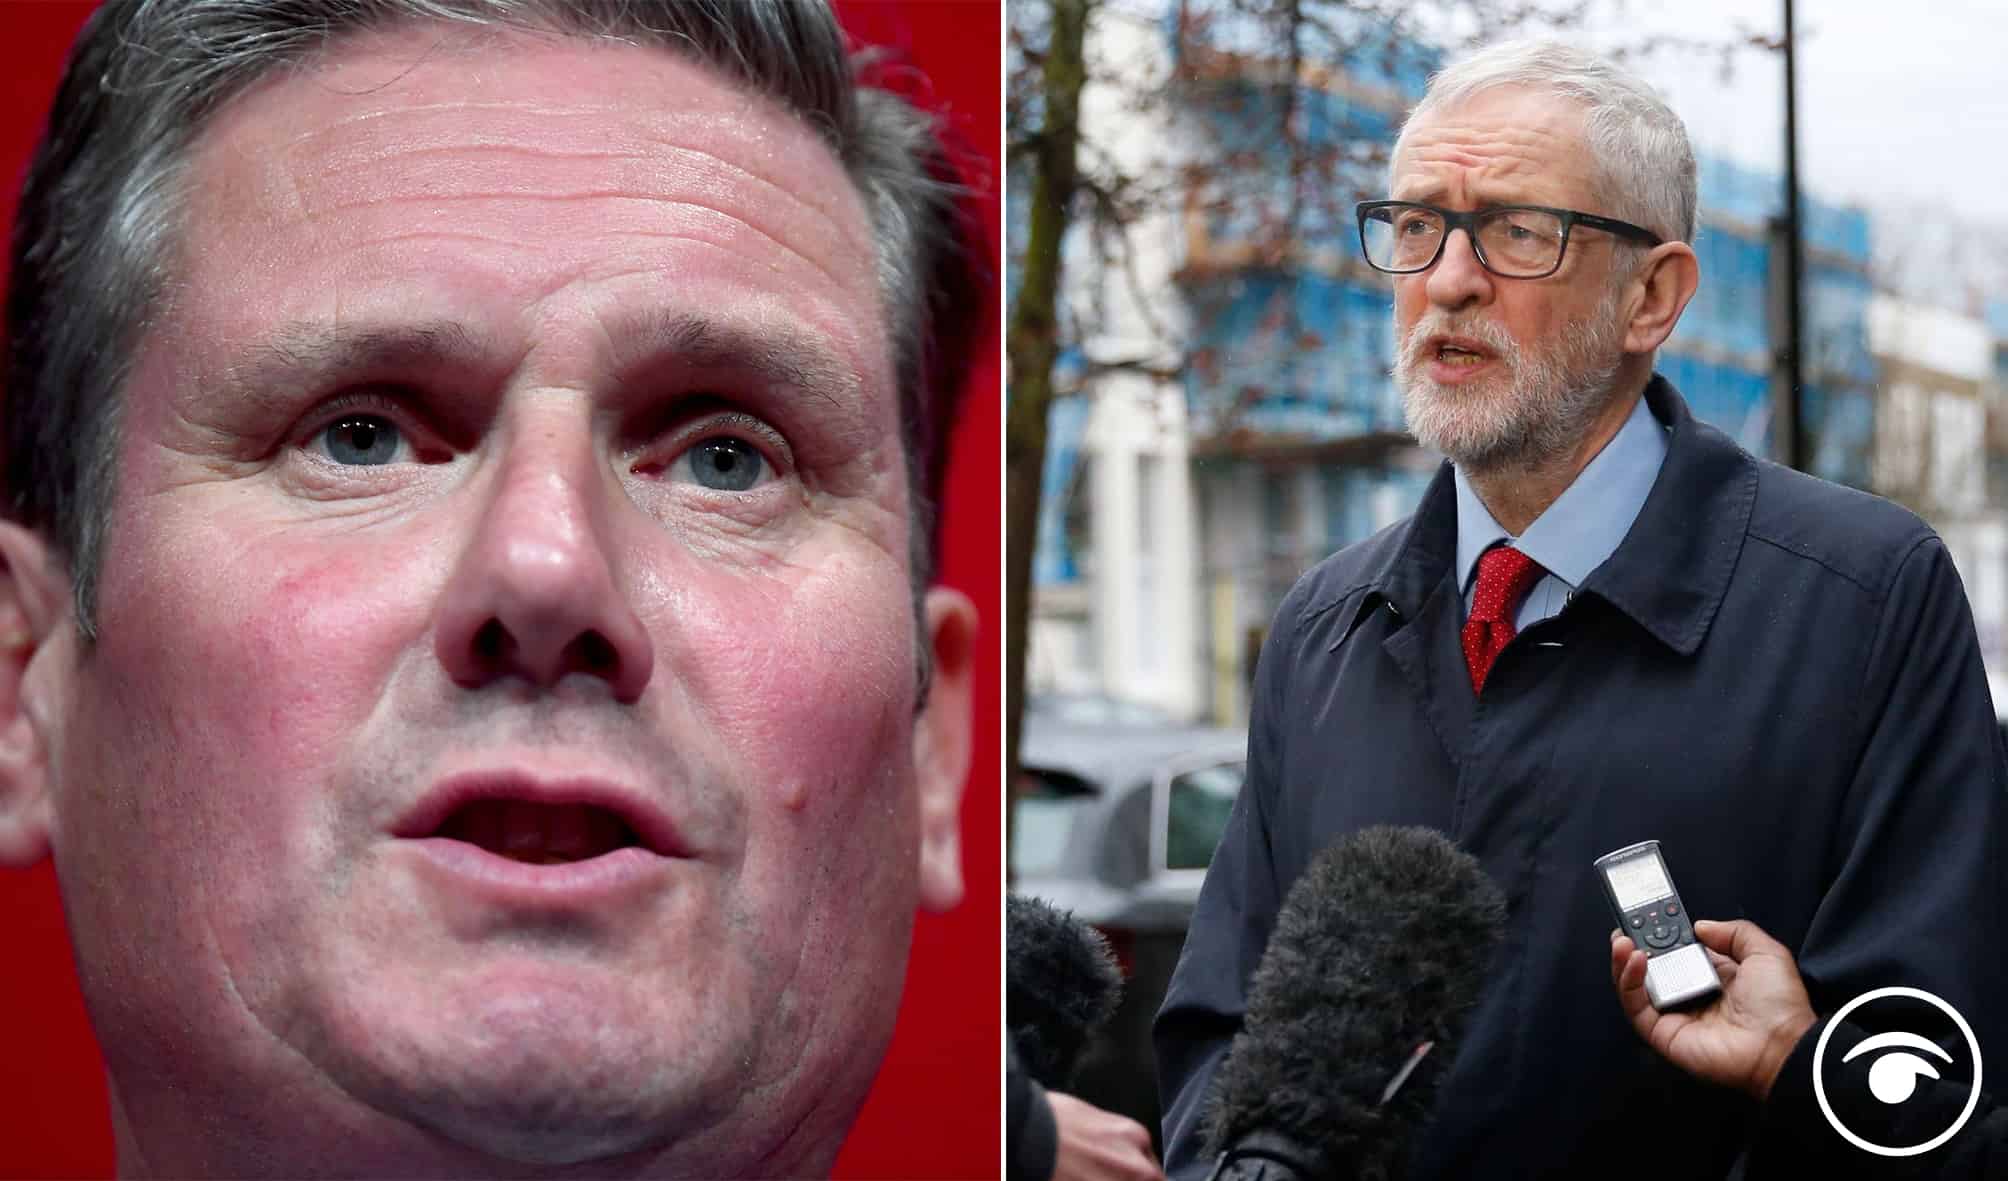 Starmer has ‘denigrated’ Labour’s democracy, says Corbyn